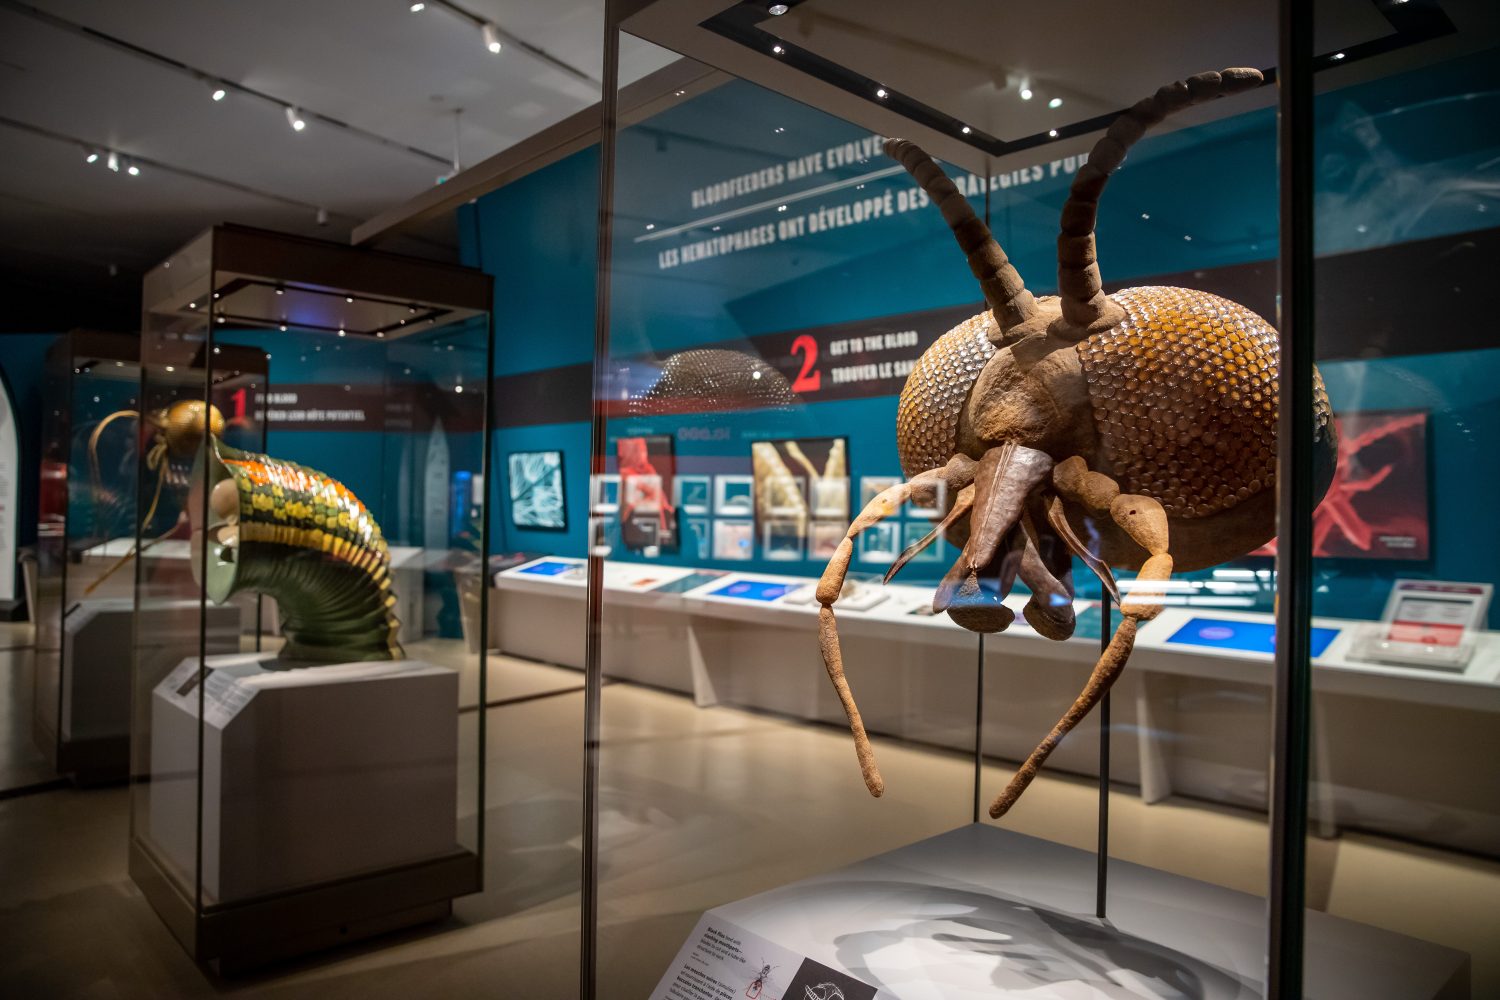 giant bug head inside glass display